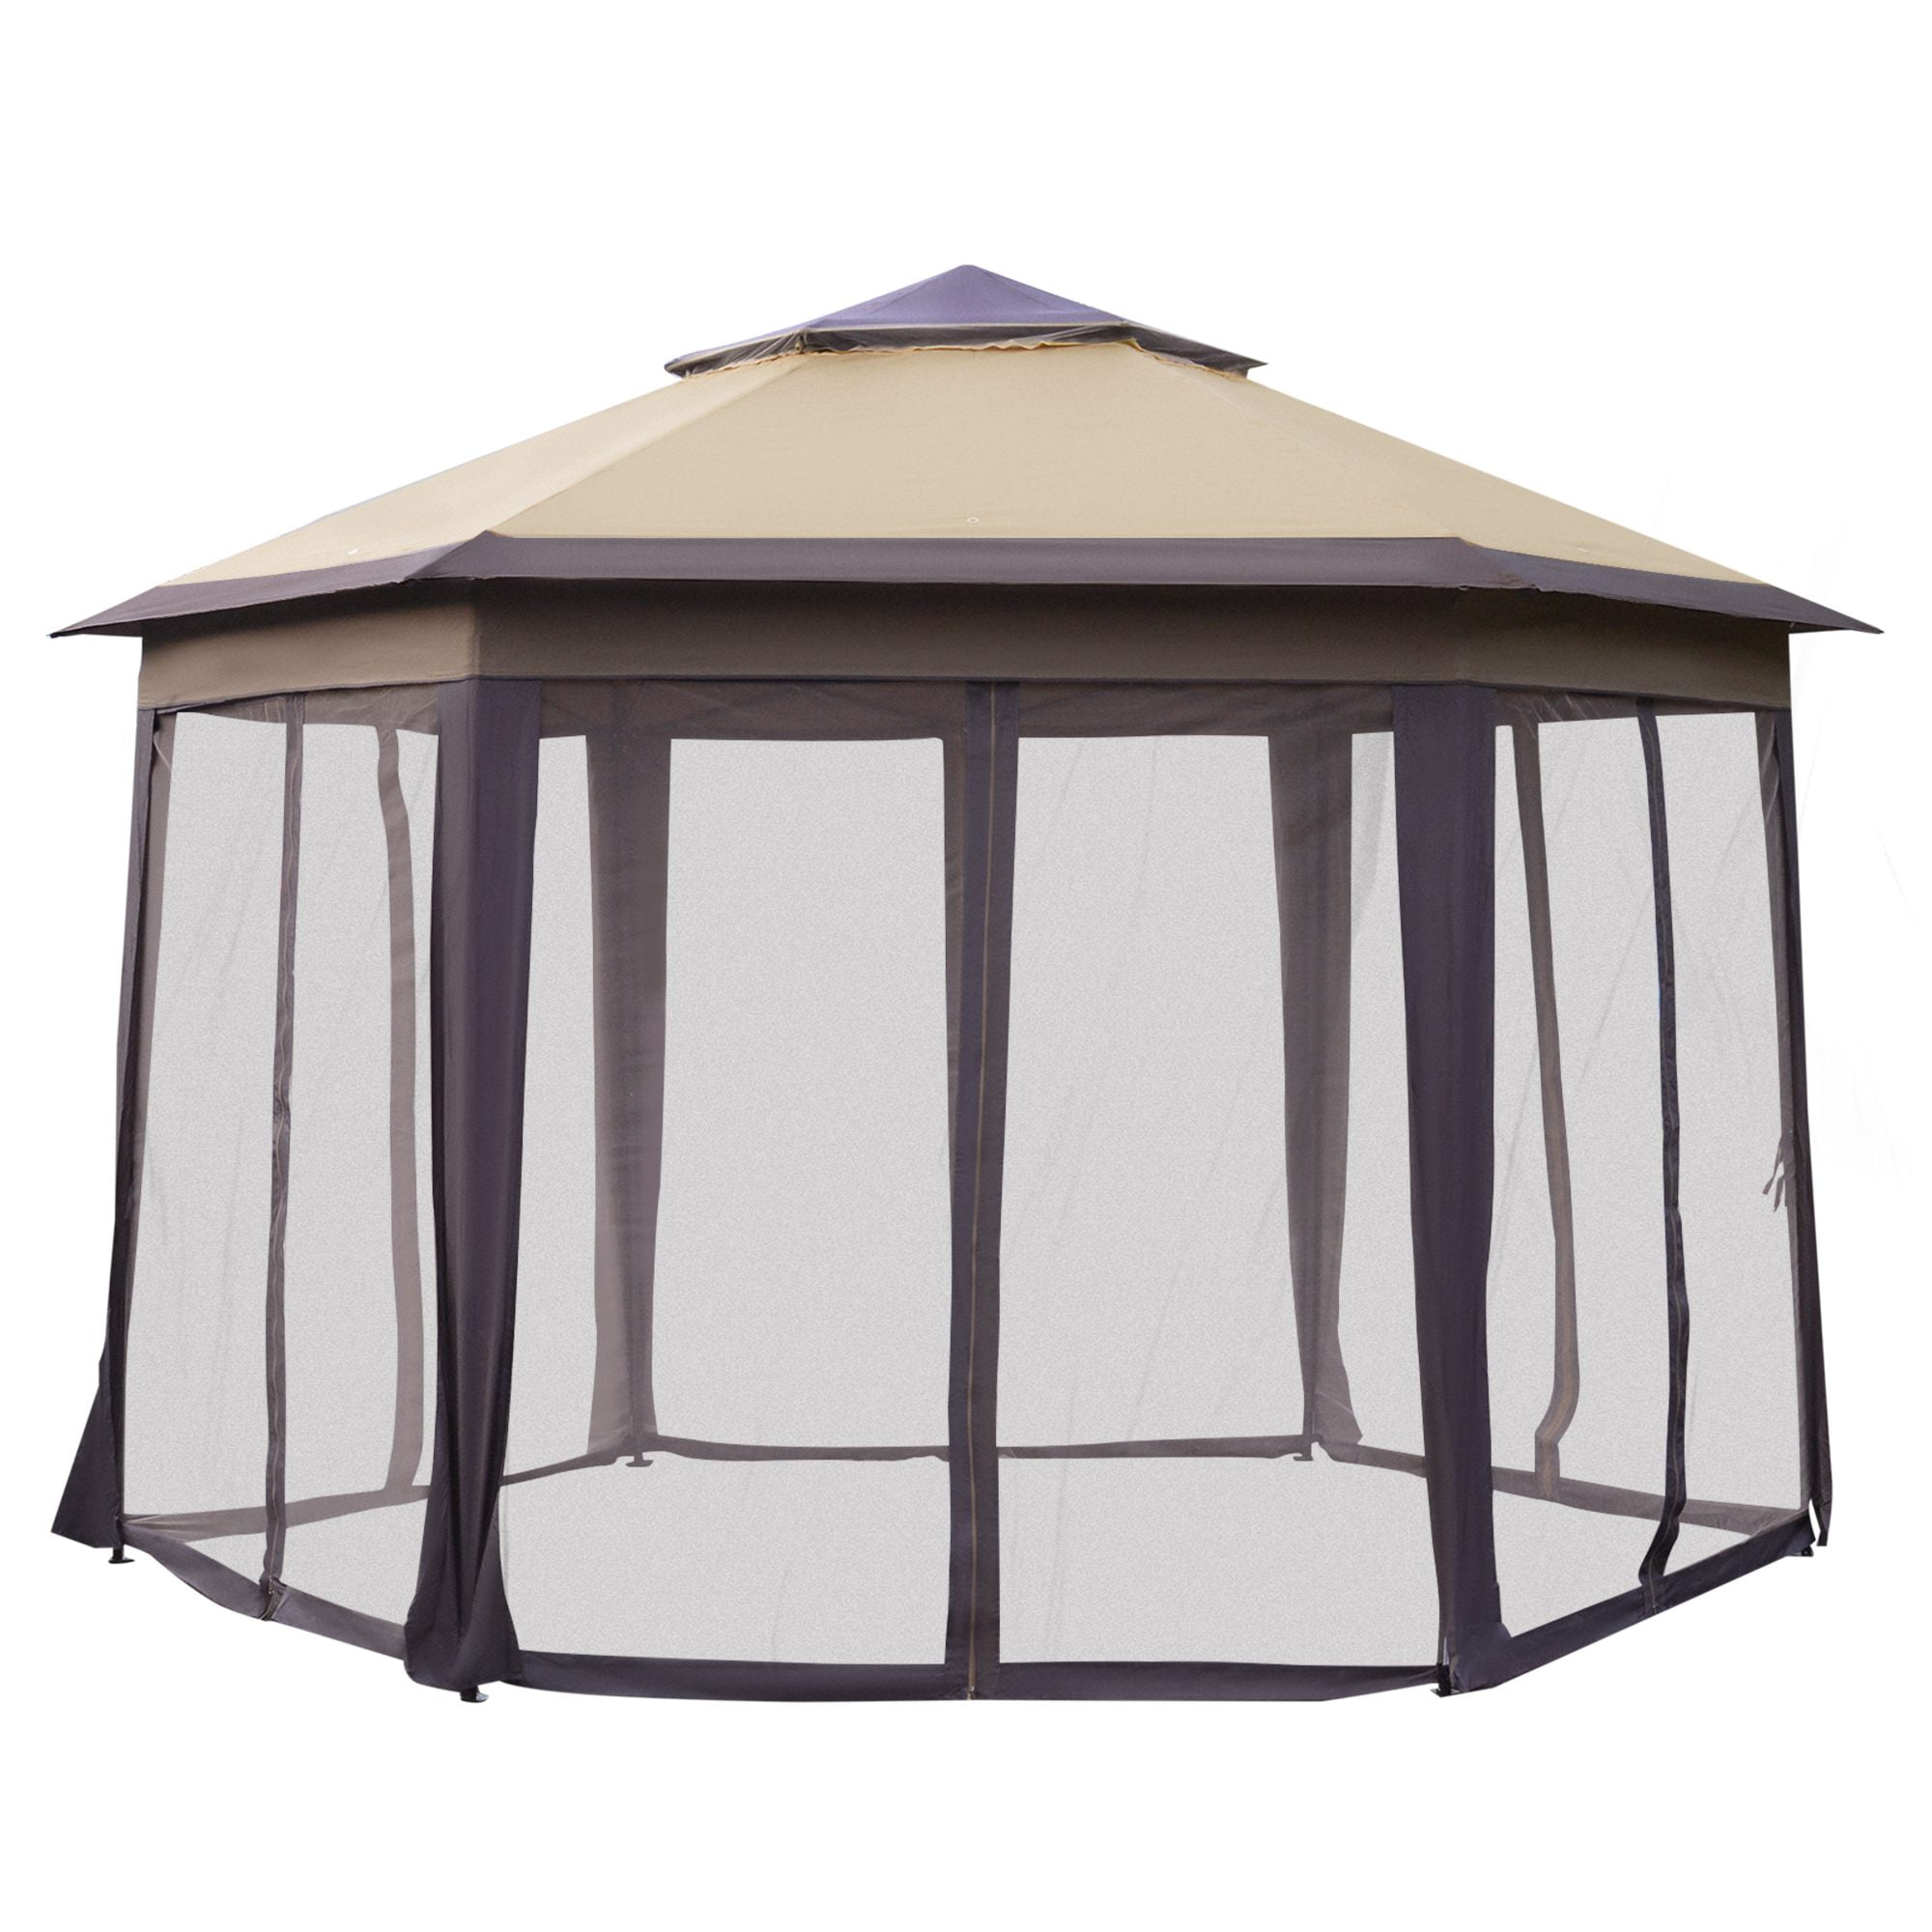 ABCCANOPY 12x12 ft Hexagon Pop Up Gazebo Outdoor Screen Gazebo Tent Instant Setup Canopy Shelter with Netting 